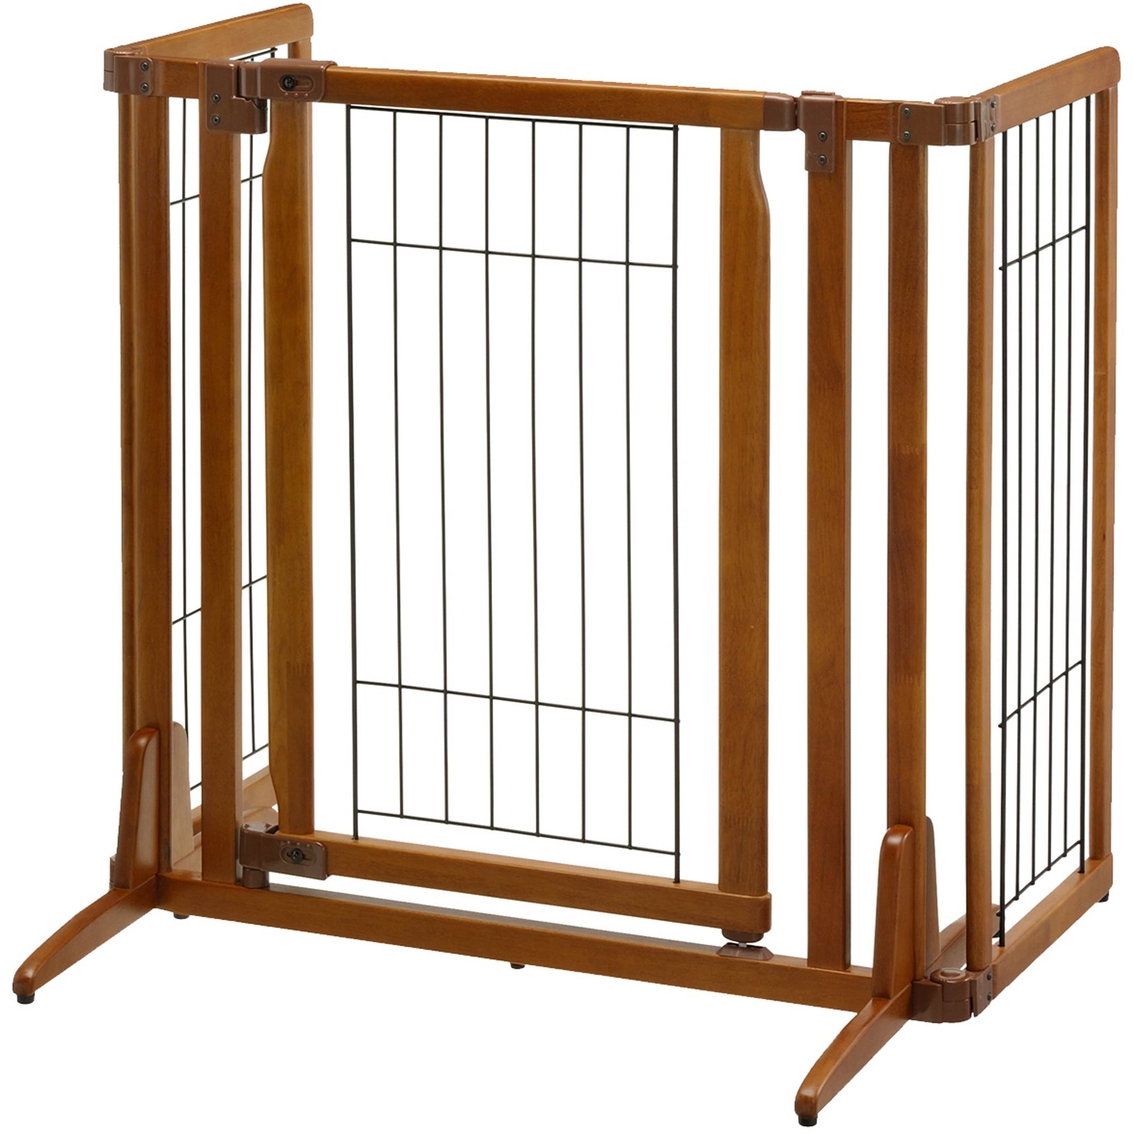 Richell Premium Plus Freestanding Pet Gate With Door - Image 2 of 5